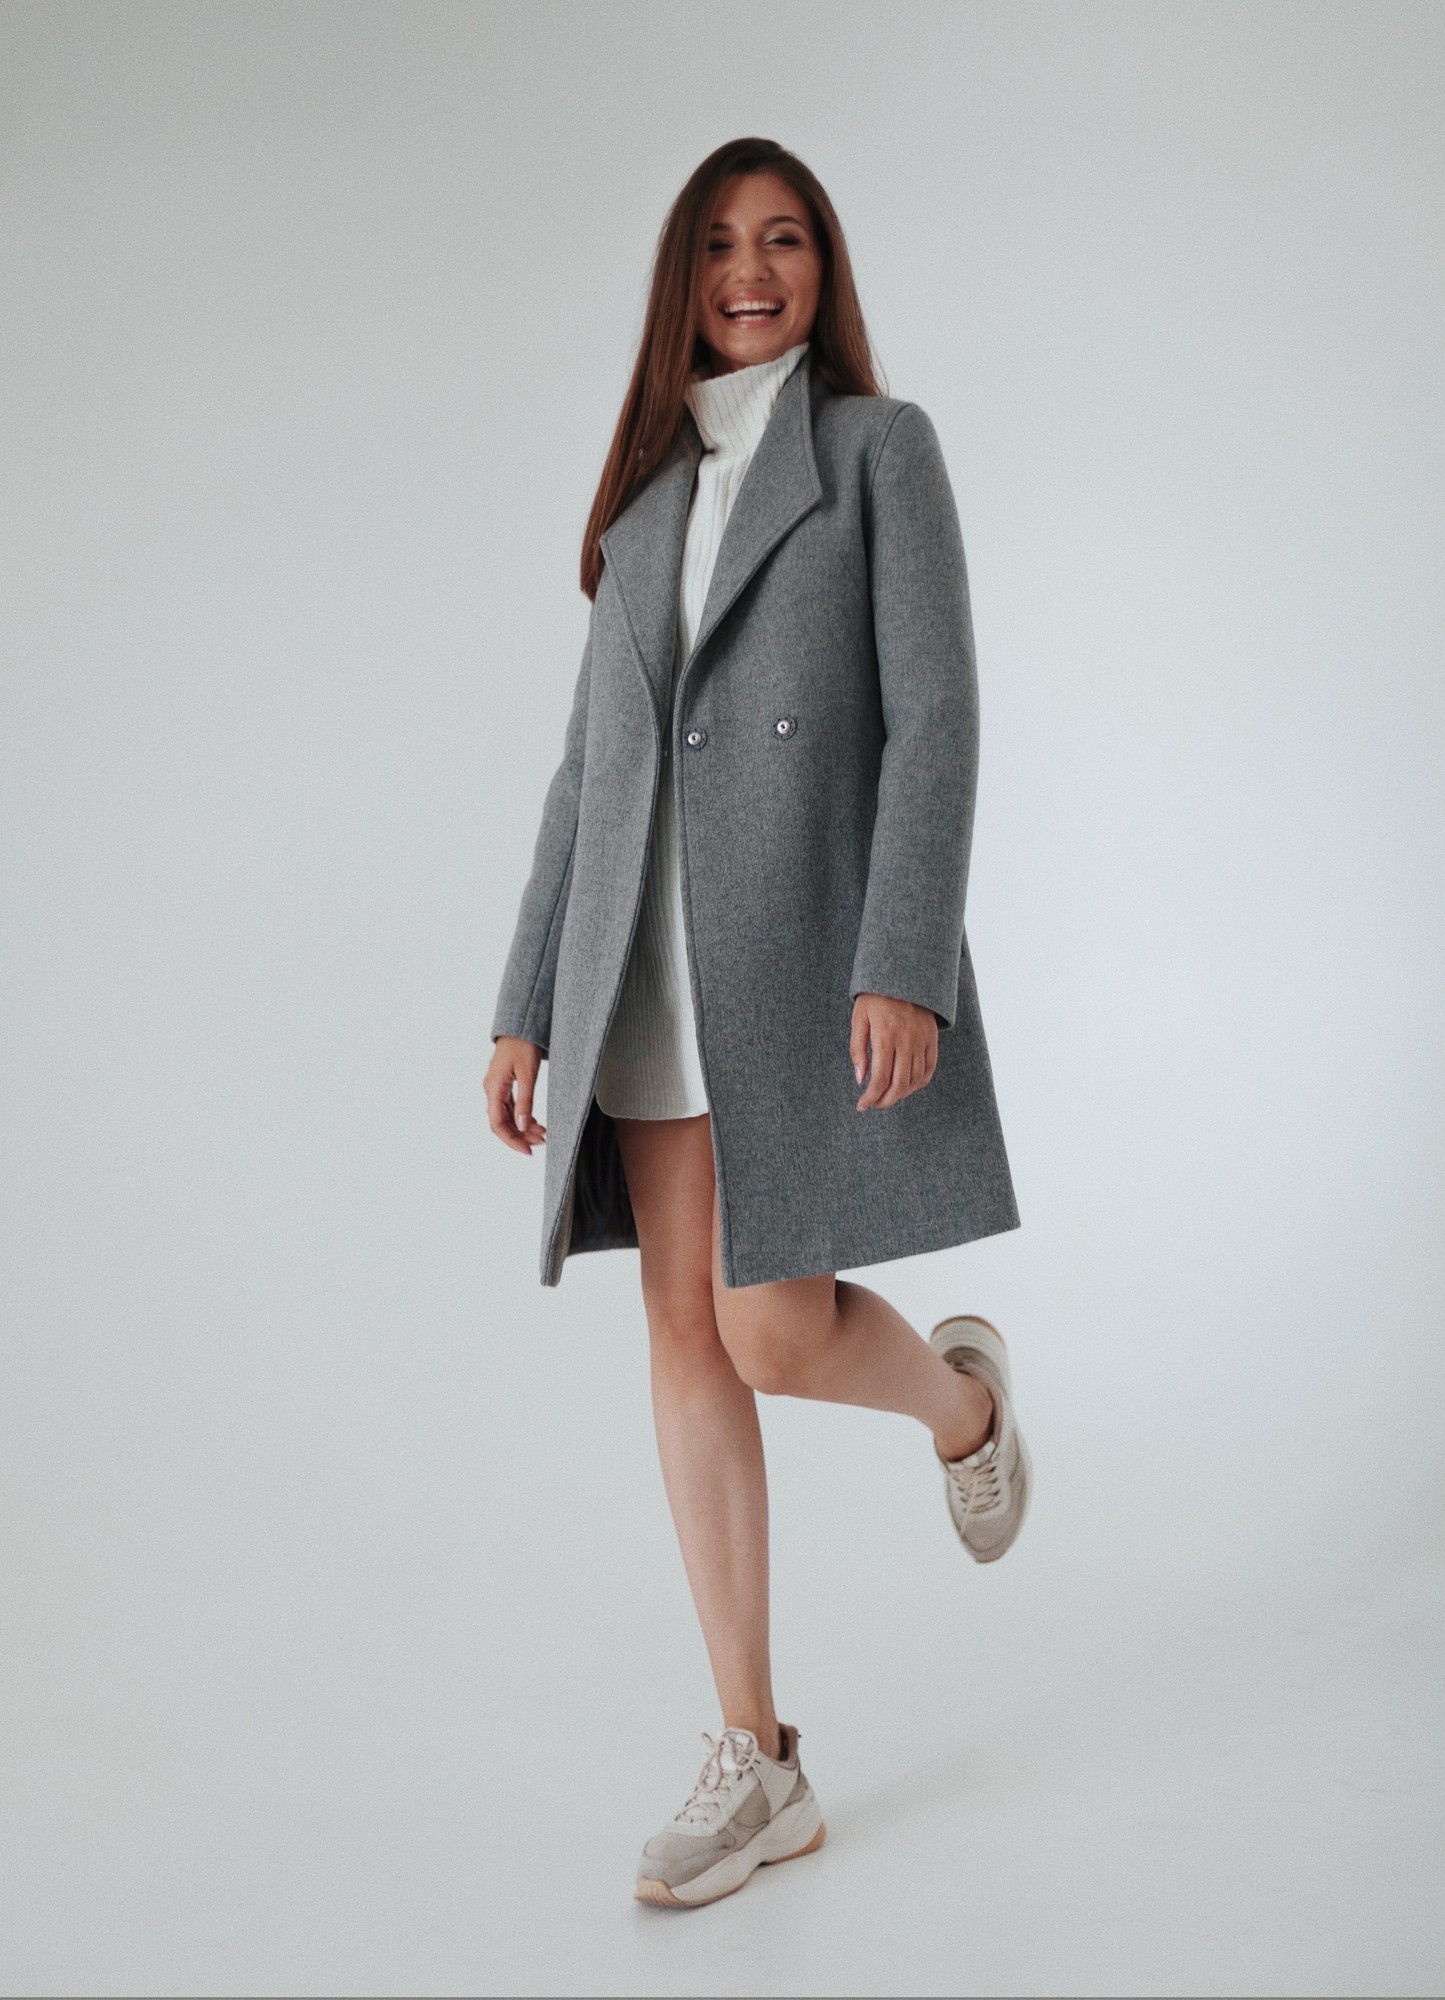 Medium-length dark gray woolen padded coat with belt